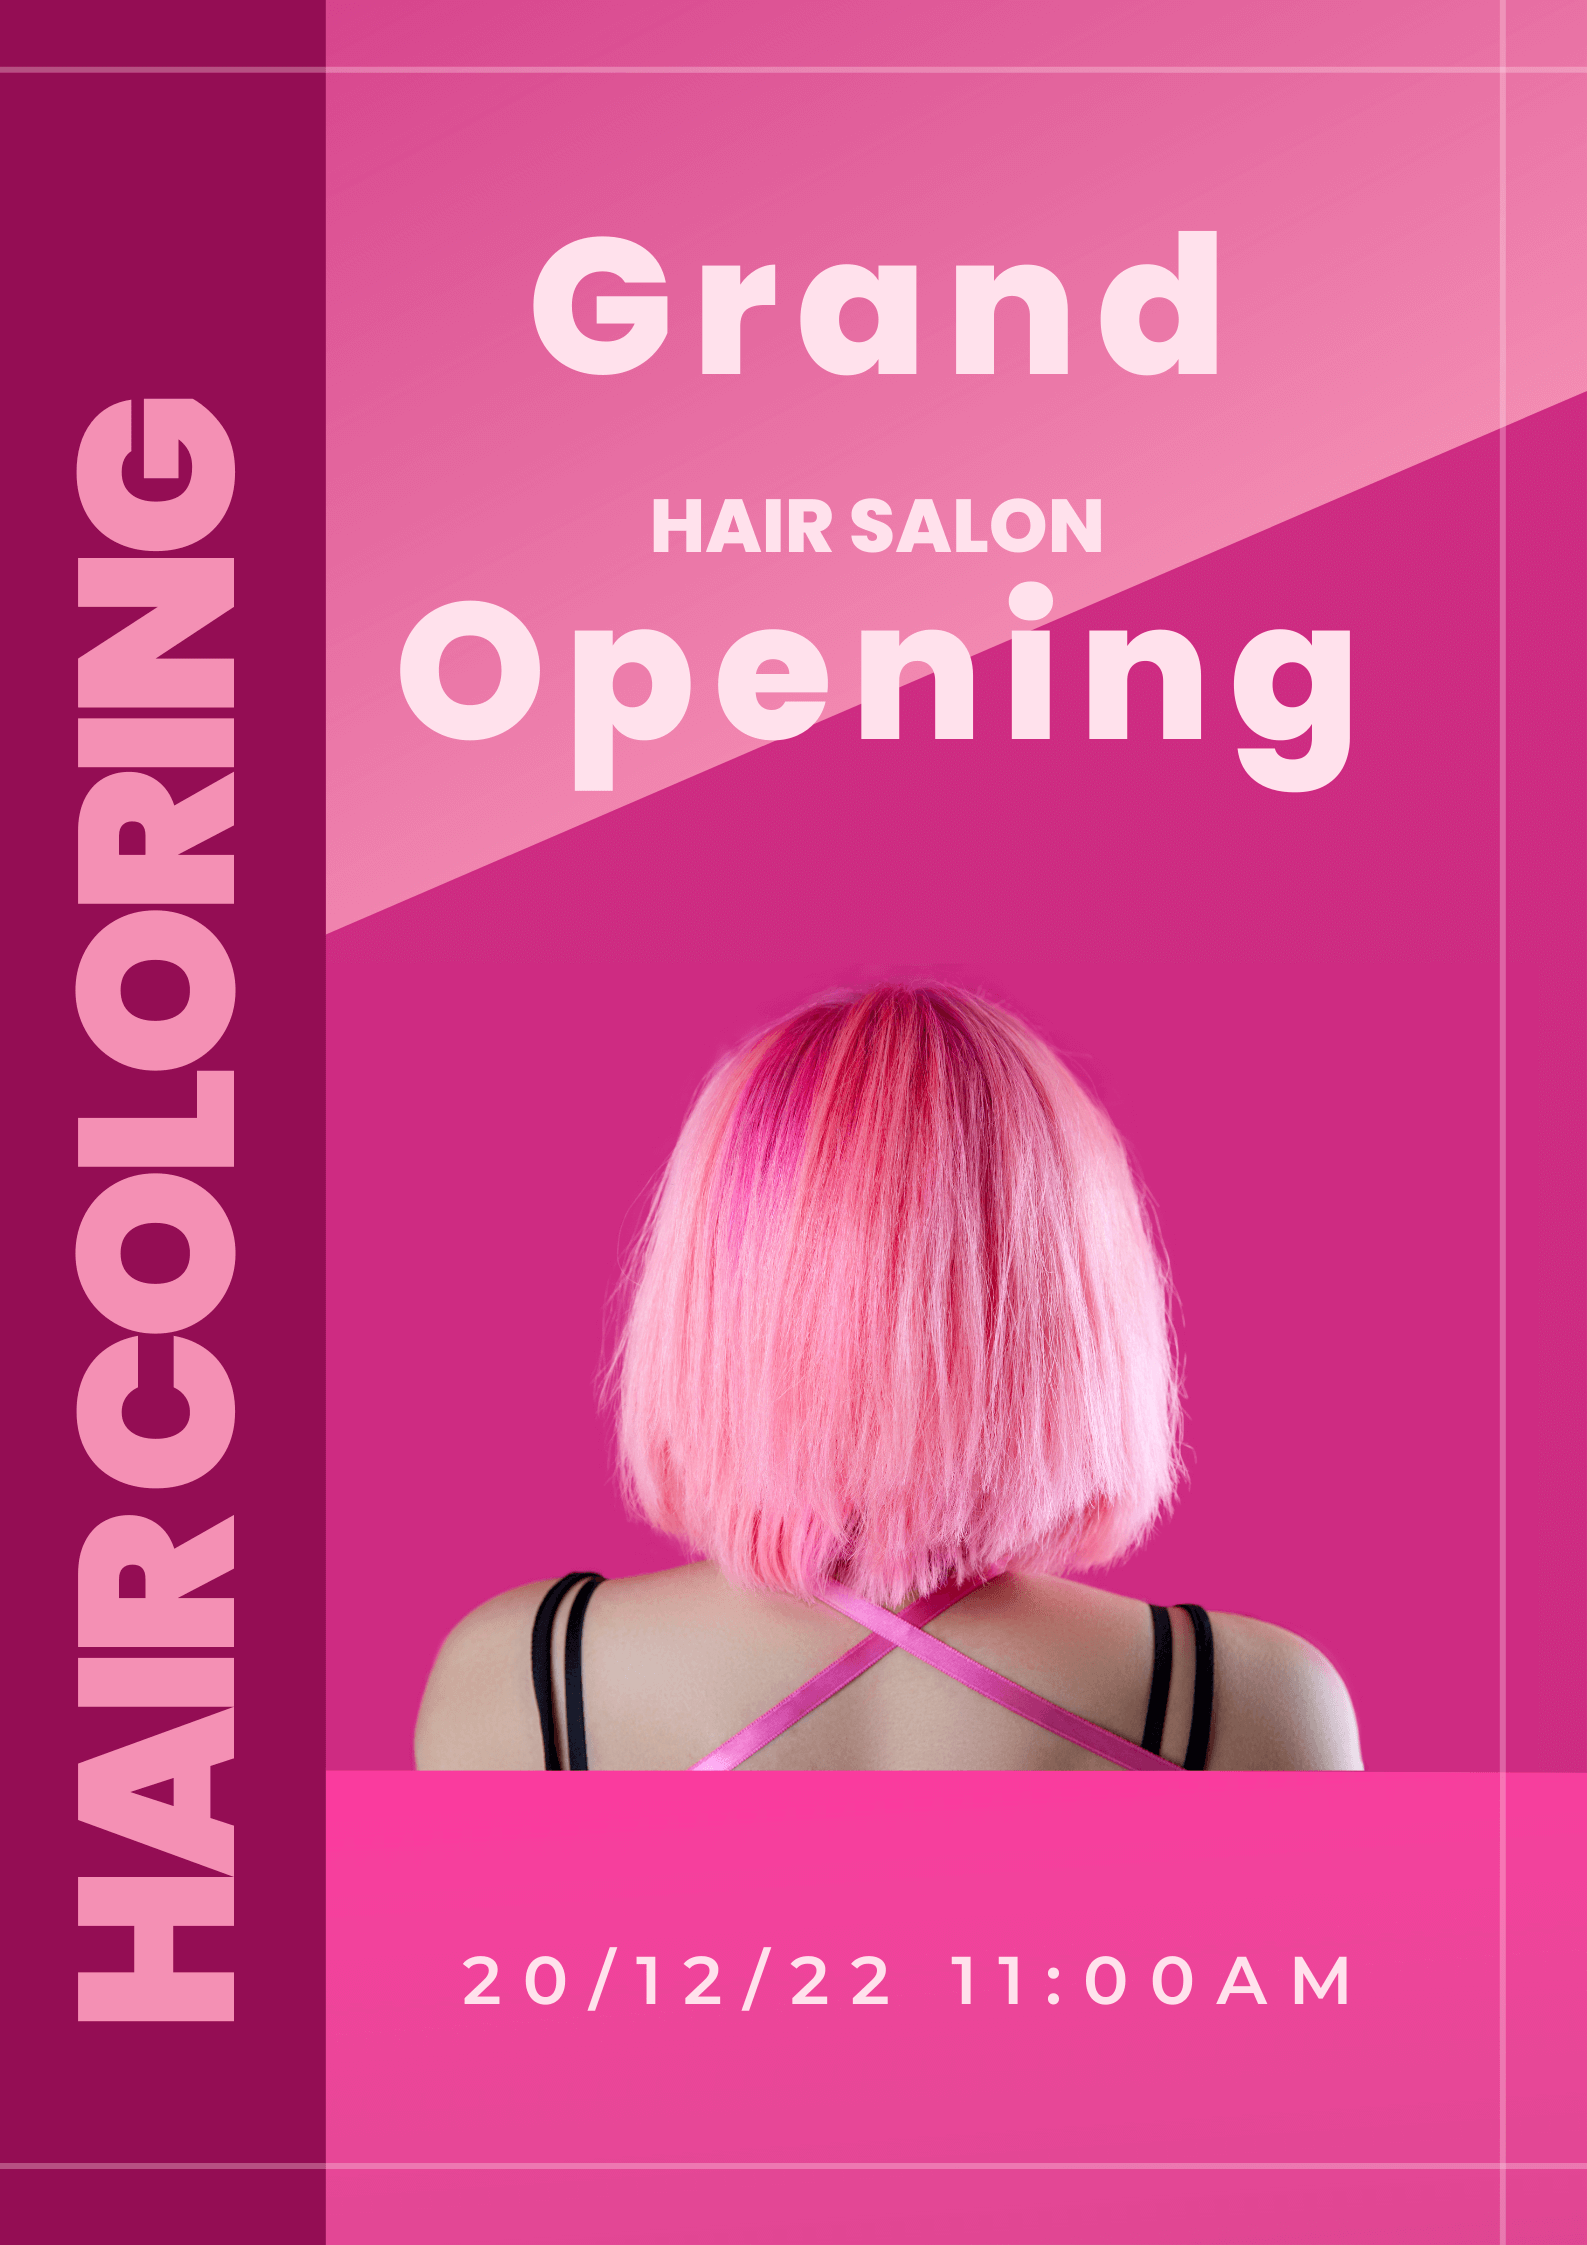 Hair salon grand opening